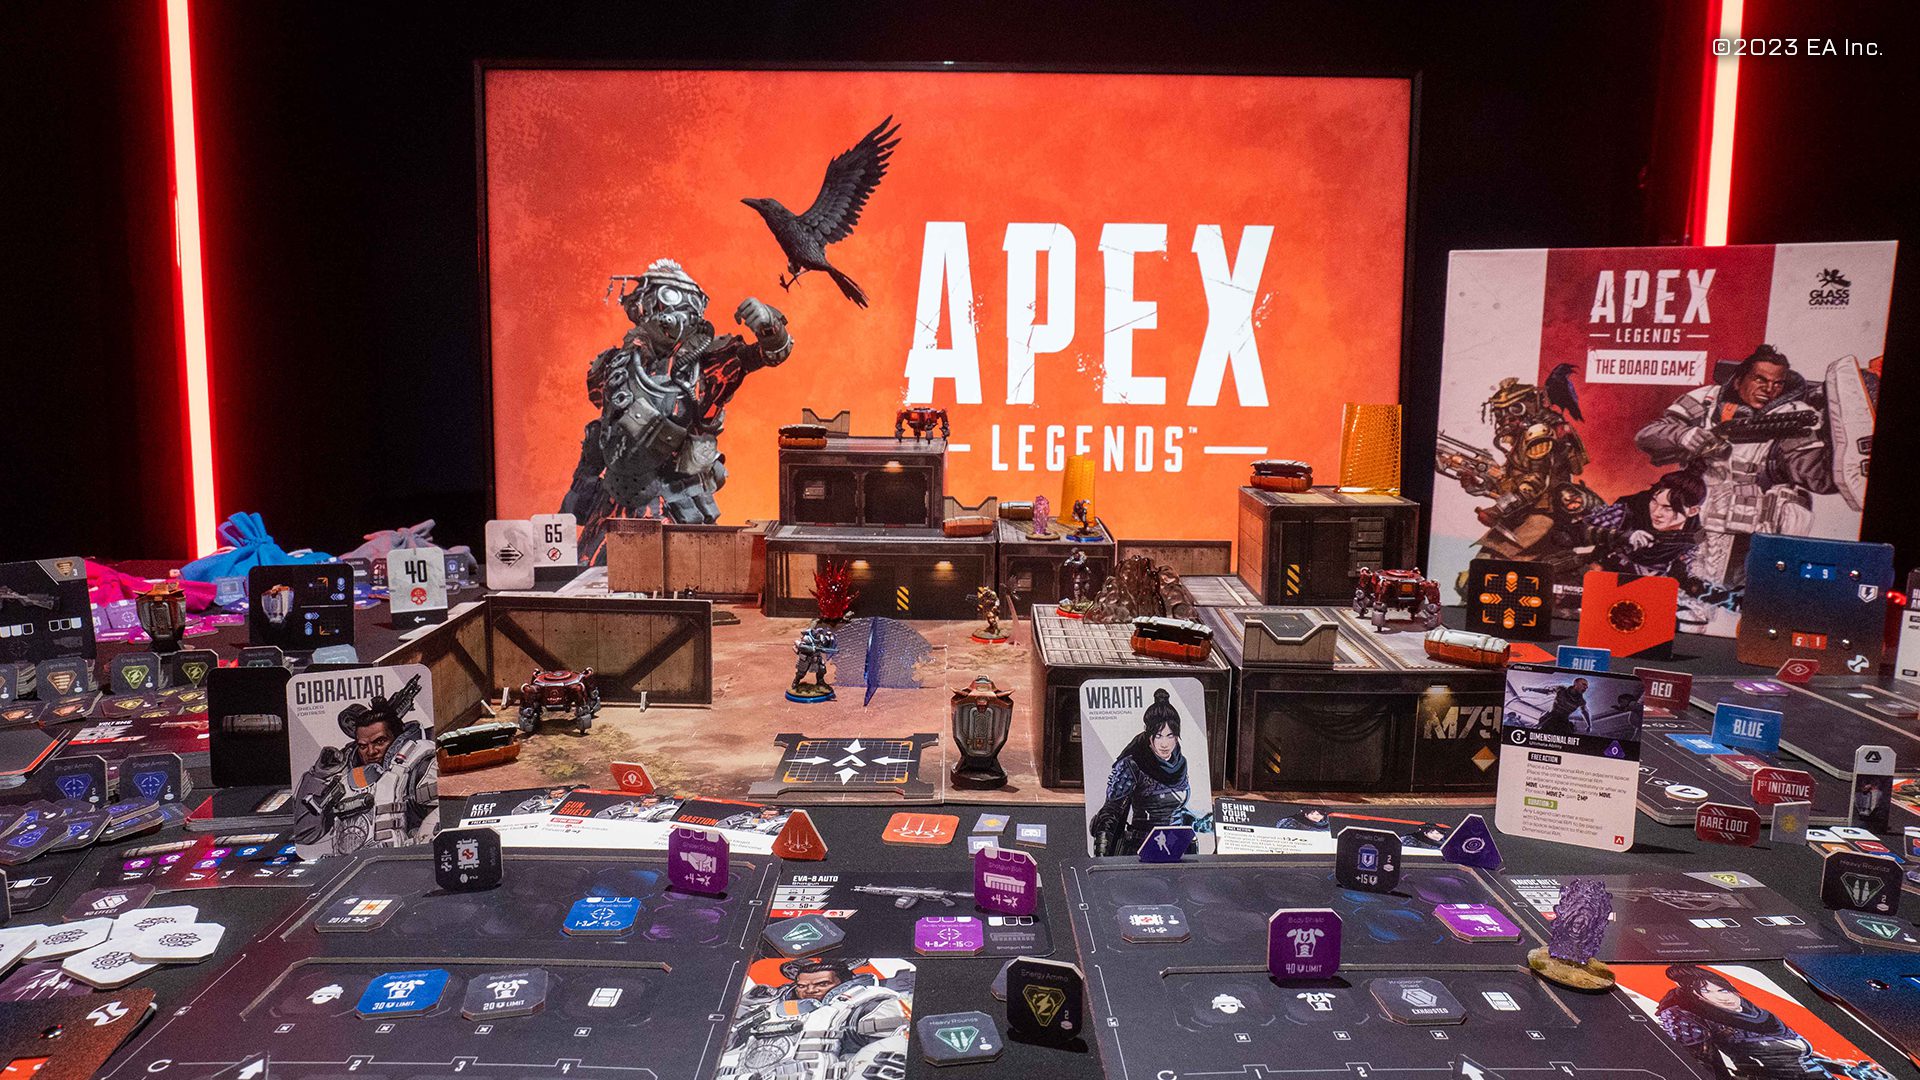 Apex Legends board, components, box, and logo